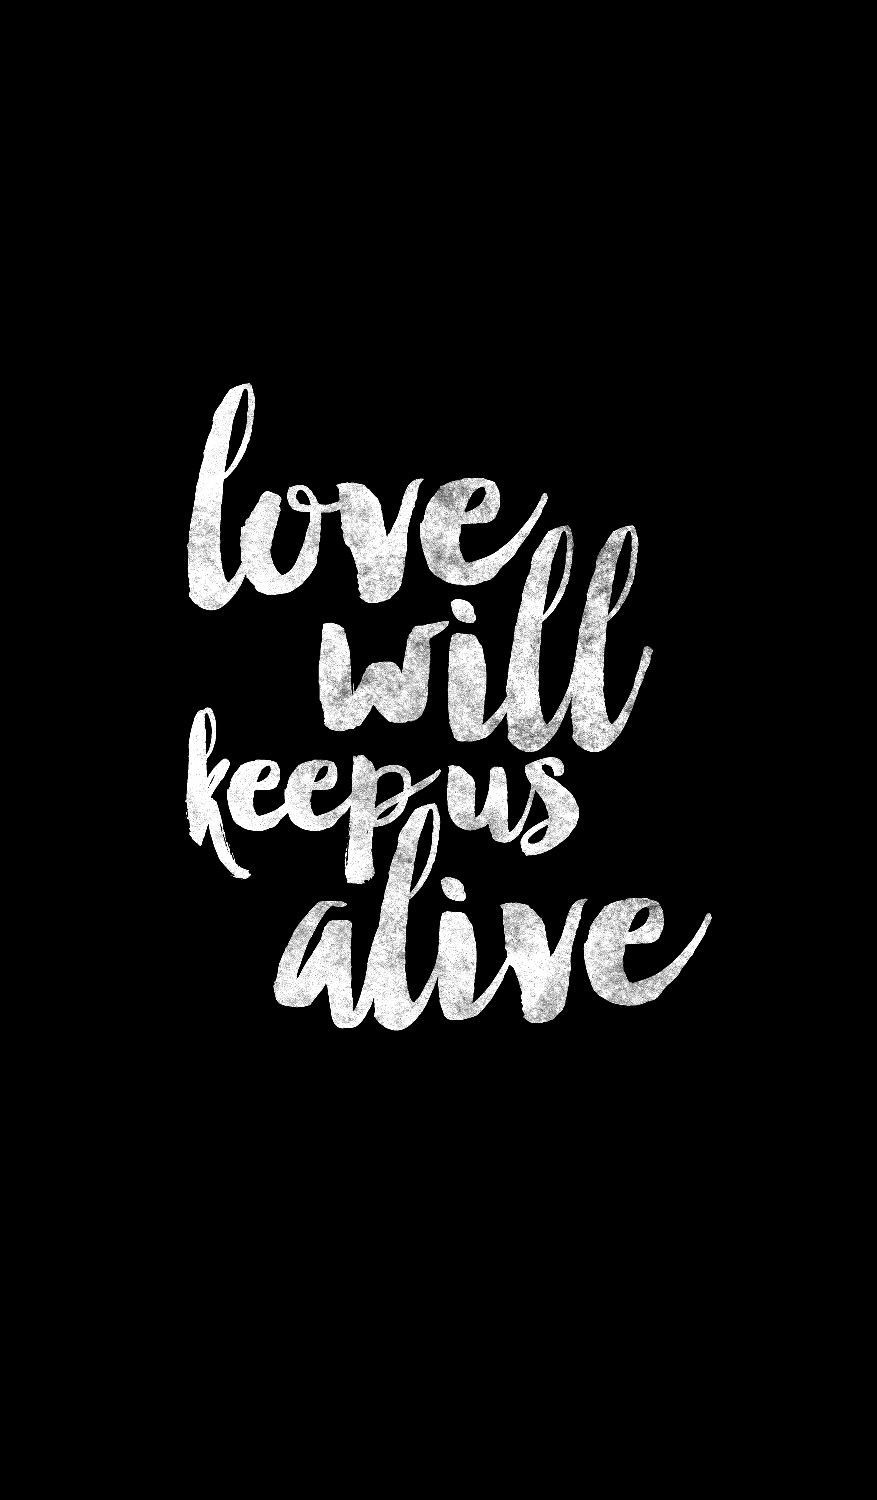 Love will keep us alive